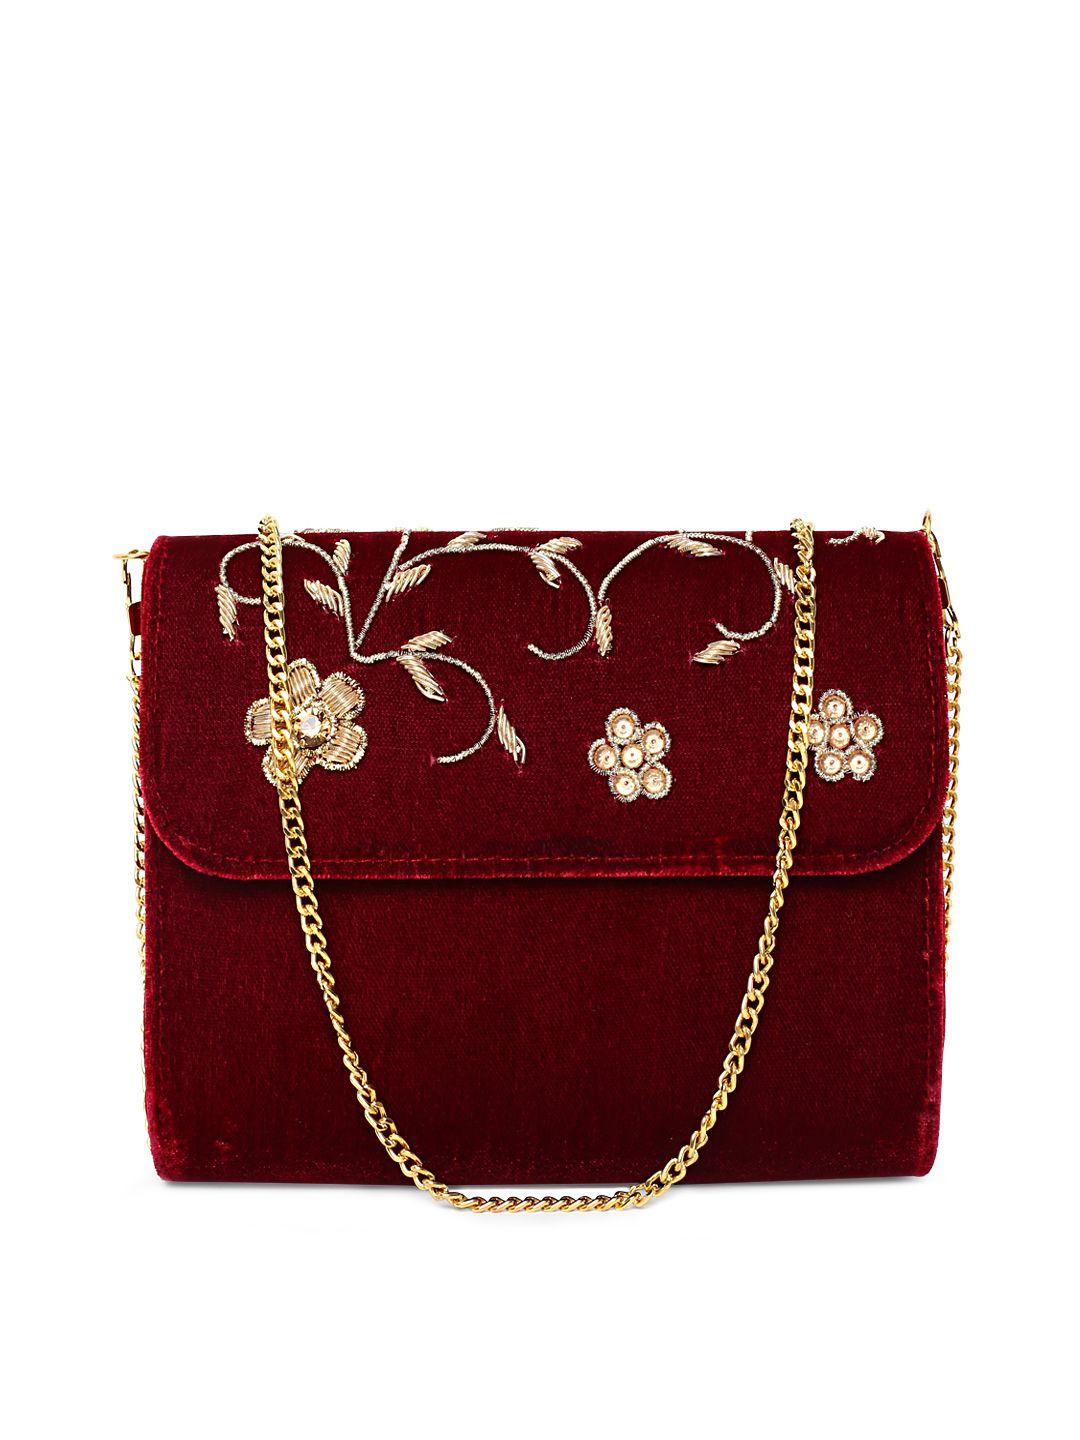 tarini nirula maroon textured purse